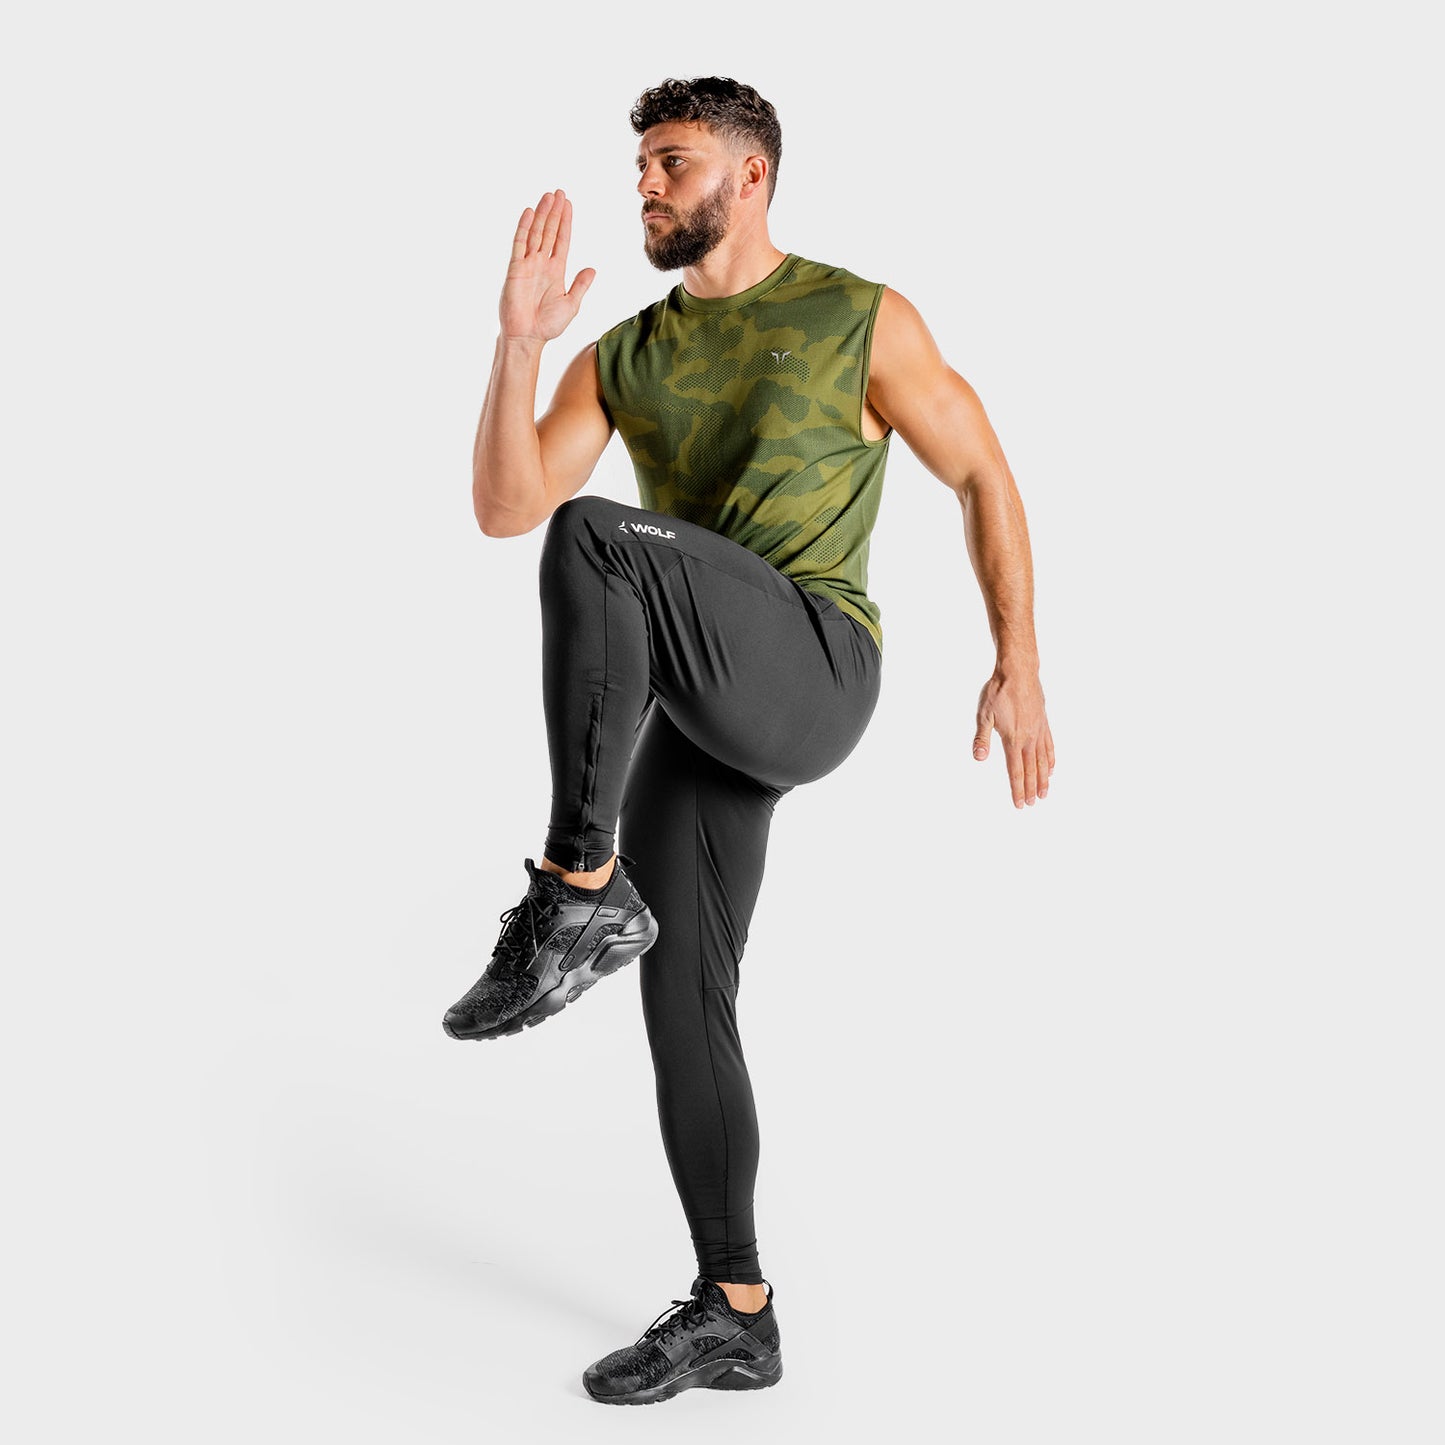 squatwolf-gym-wear-wolf-seamless-tank-khaki-workout-tank-tops-for-men